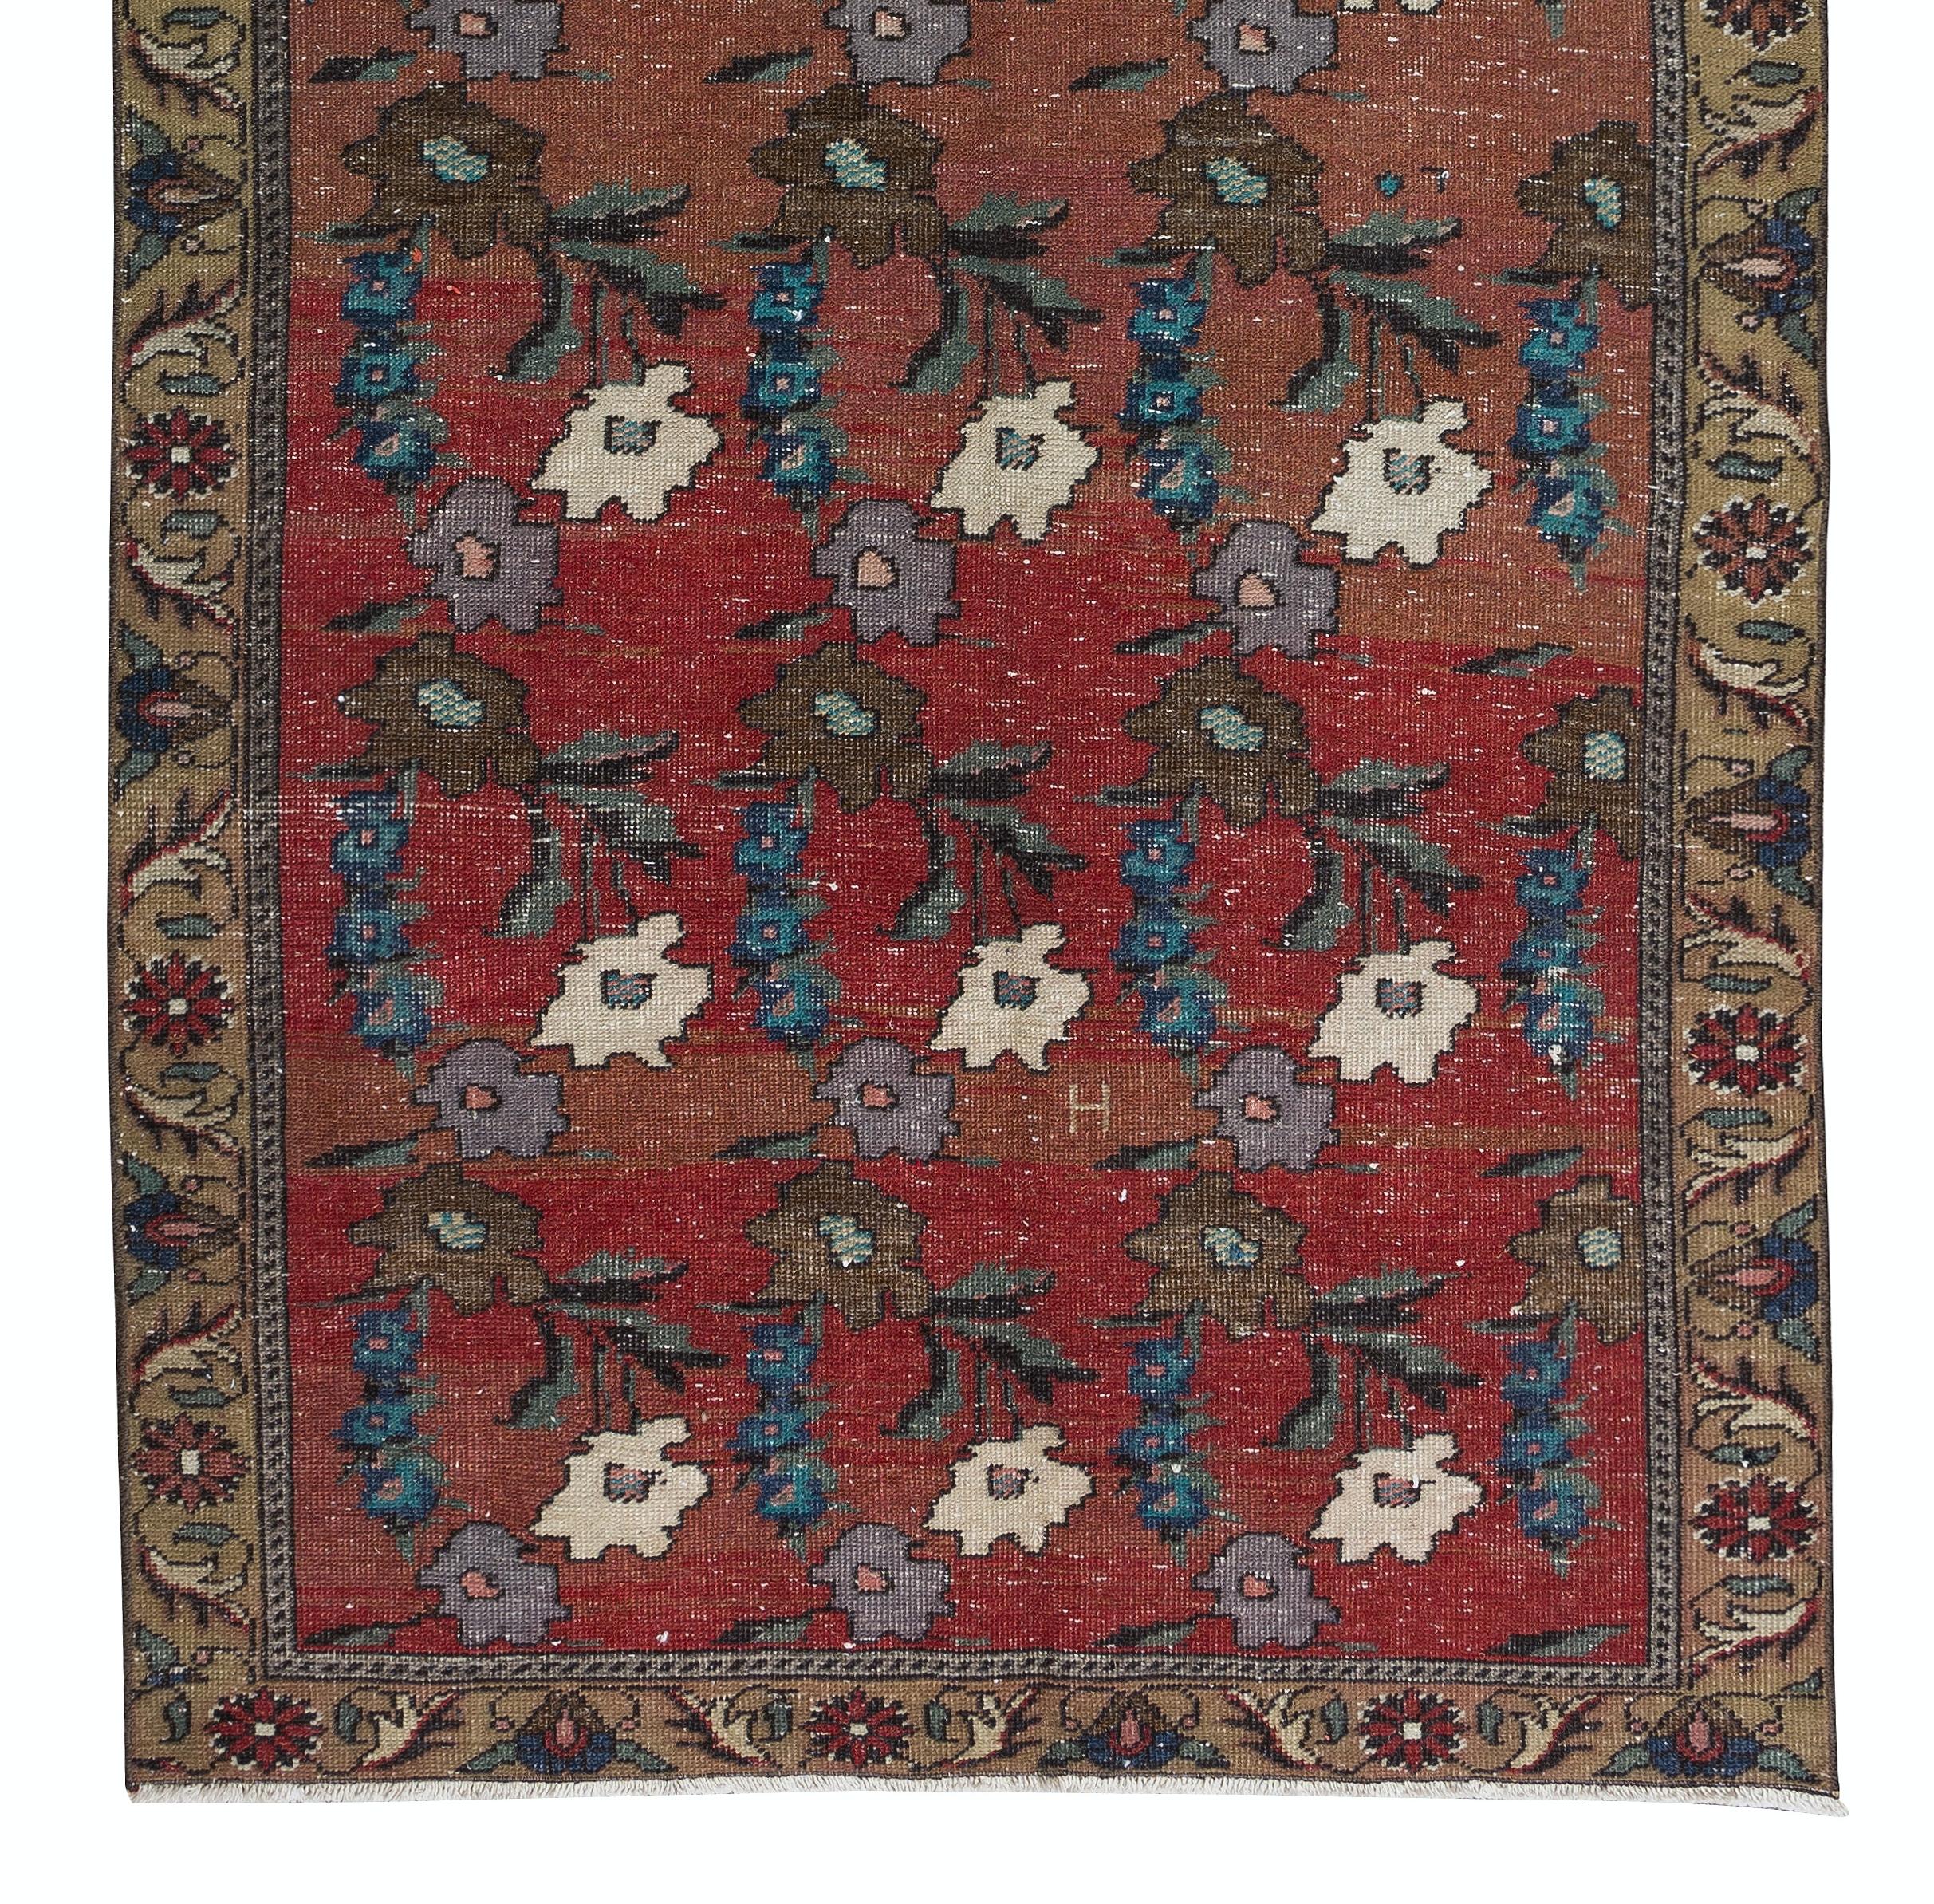 Hand-Woven 3.9x8.4 Ft Vintage Handmade Floral Patterned Turkish Rug in Red, Blue & Beige For Sale